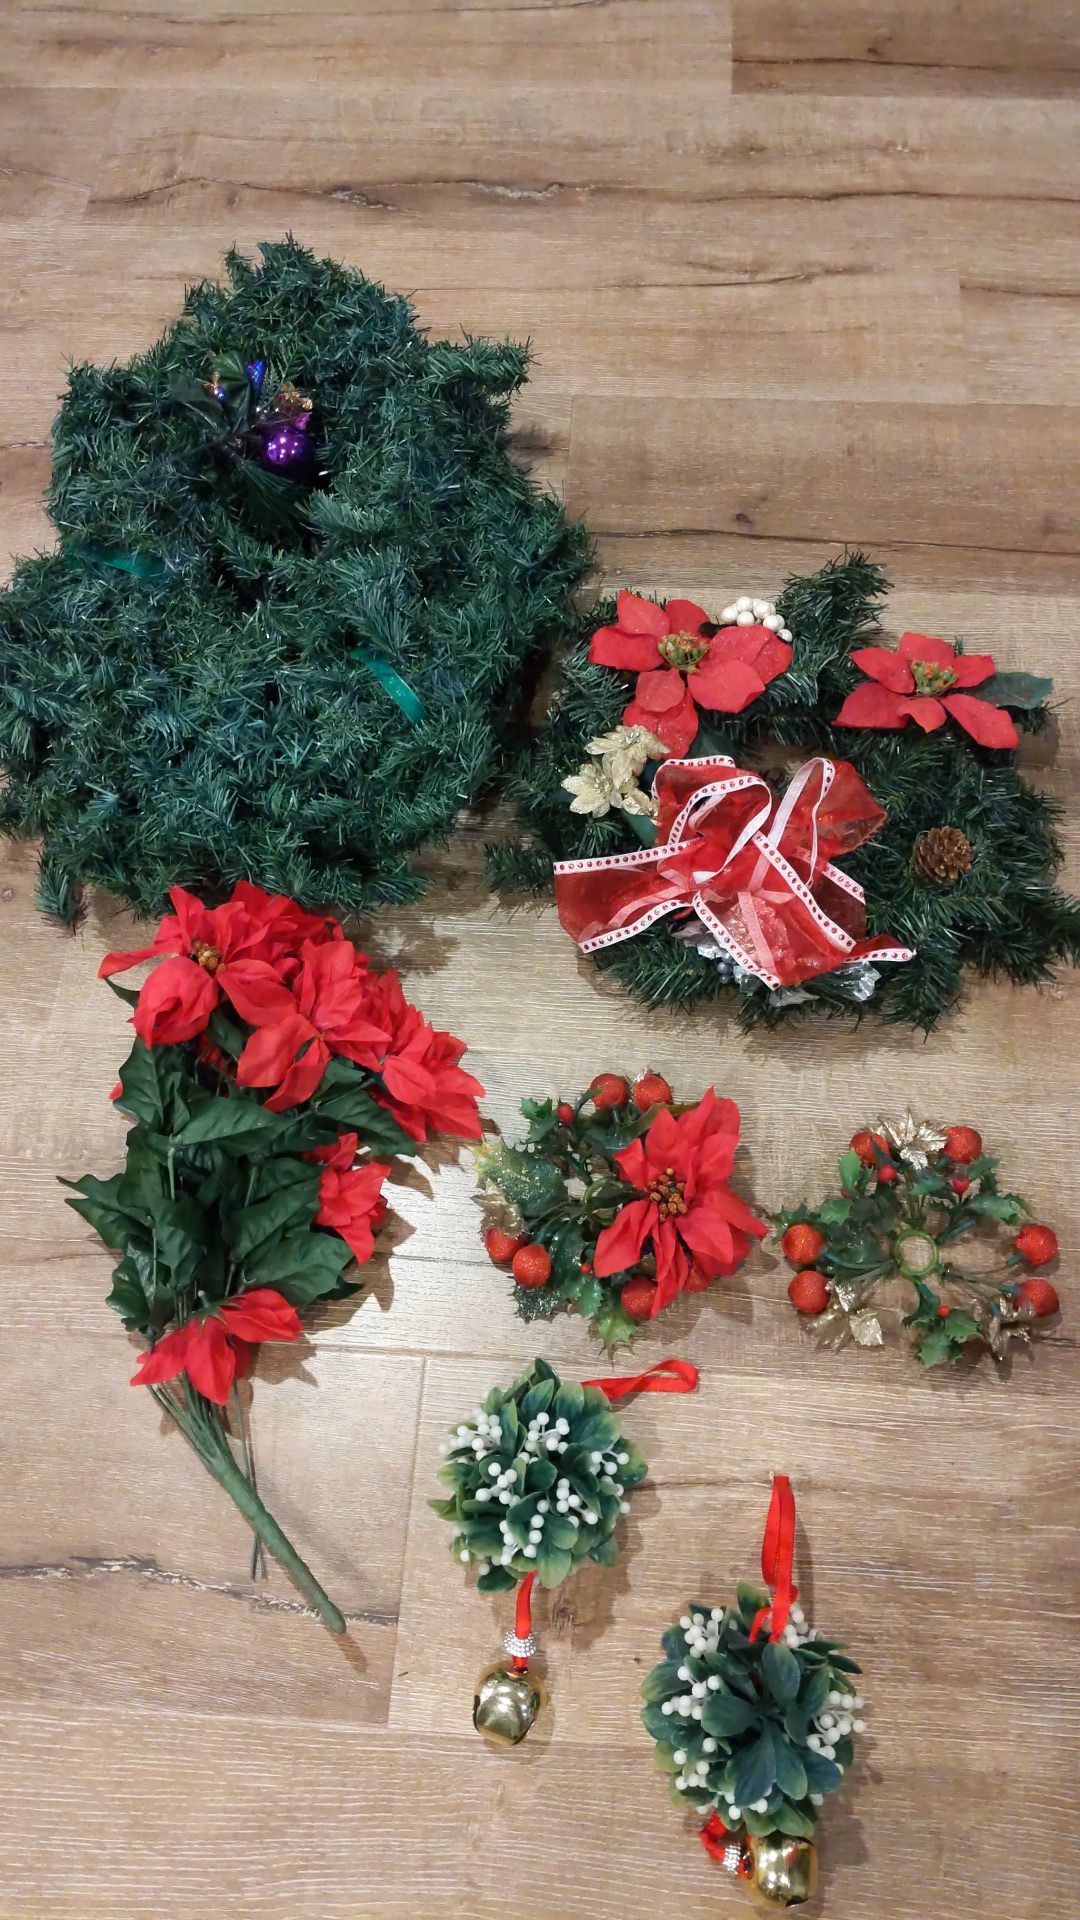 Christmas decor wreath, flower, ornaments, etc